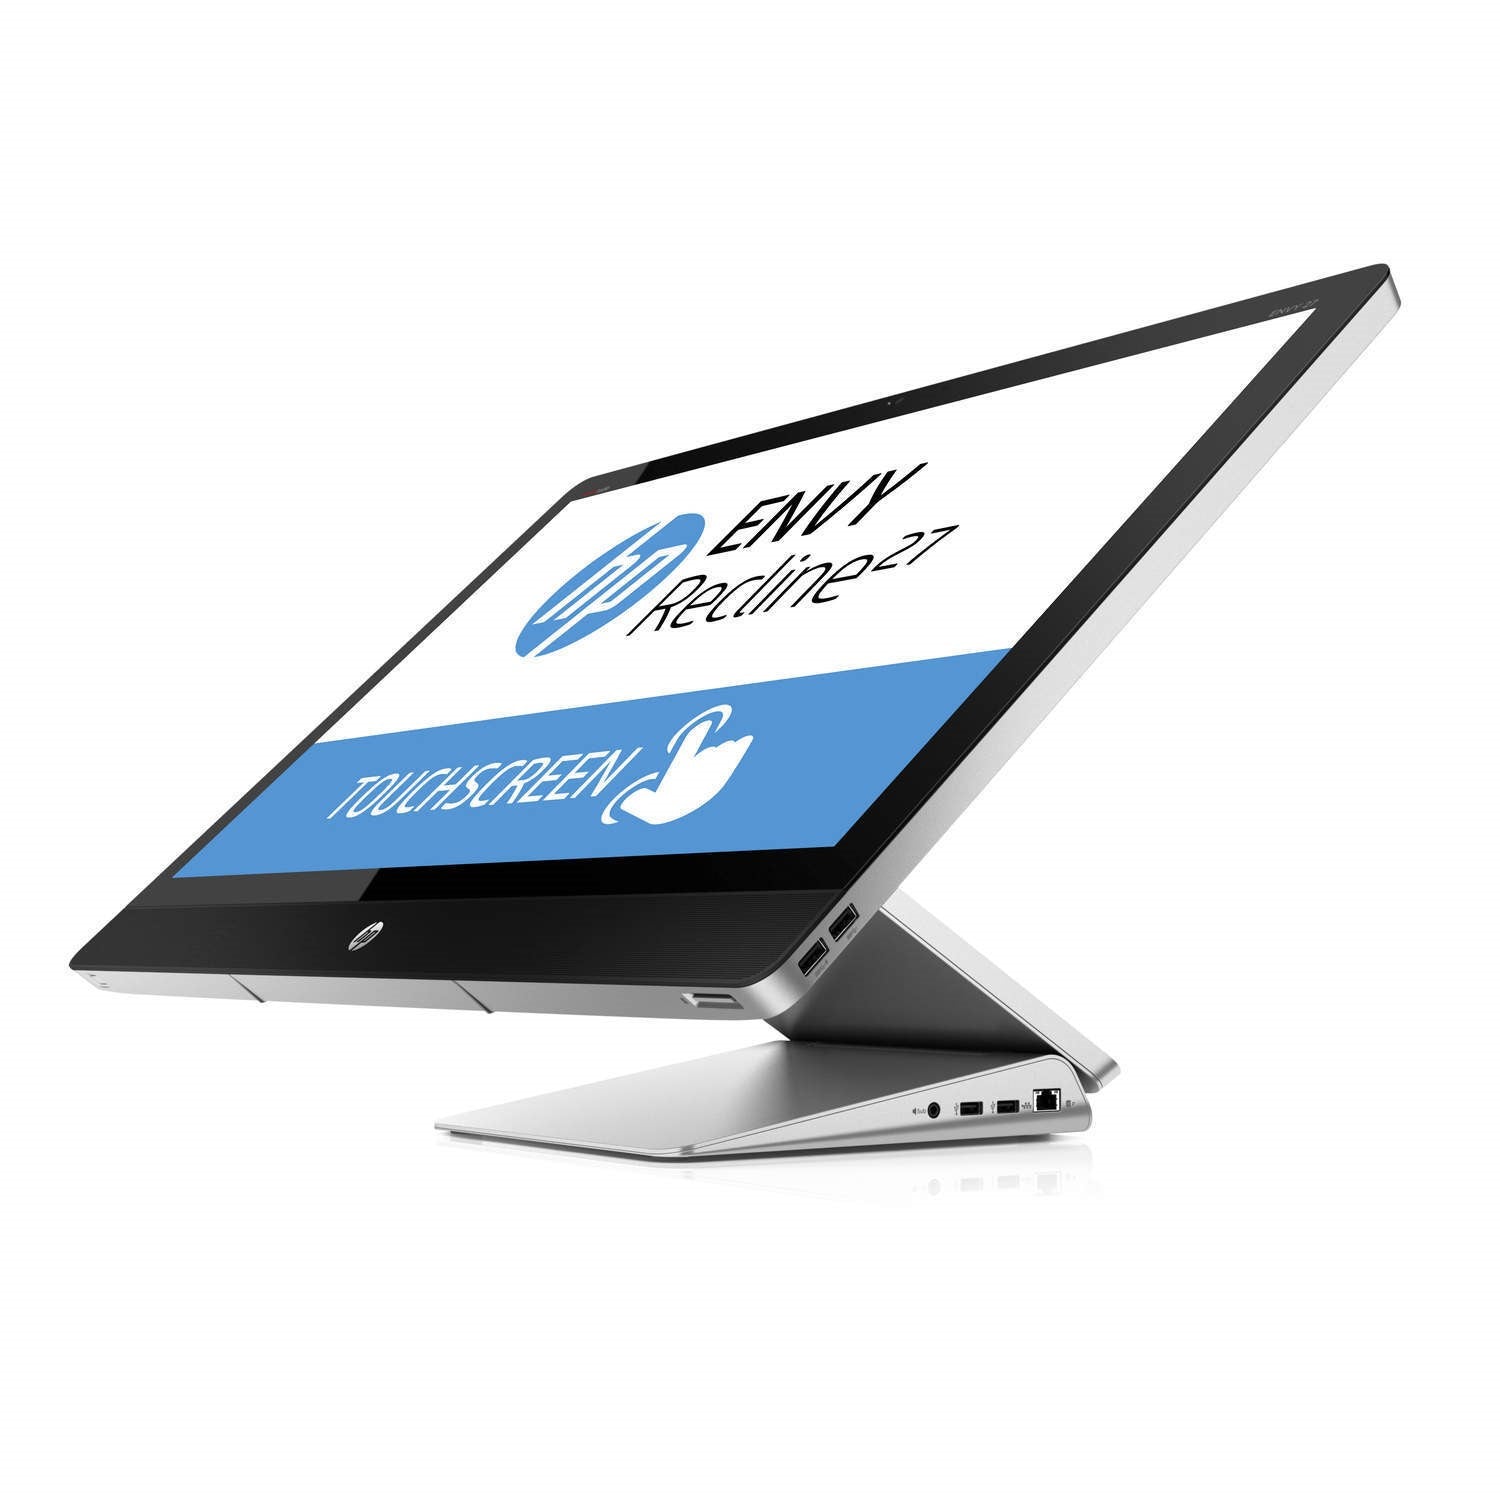 HP Envy Recline Touch 27-k405na Intel Core i5-540M 8GB RAM 2TB HDD - 27" - Silver